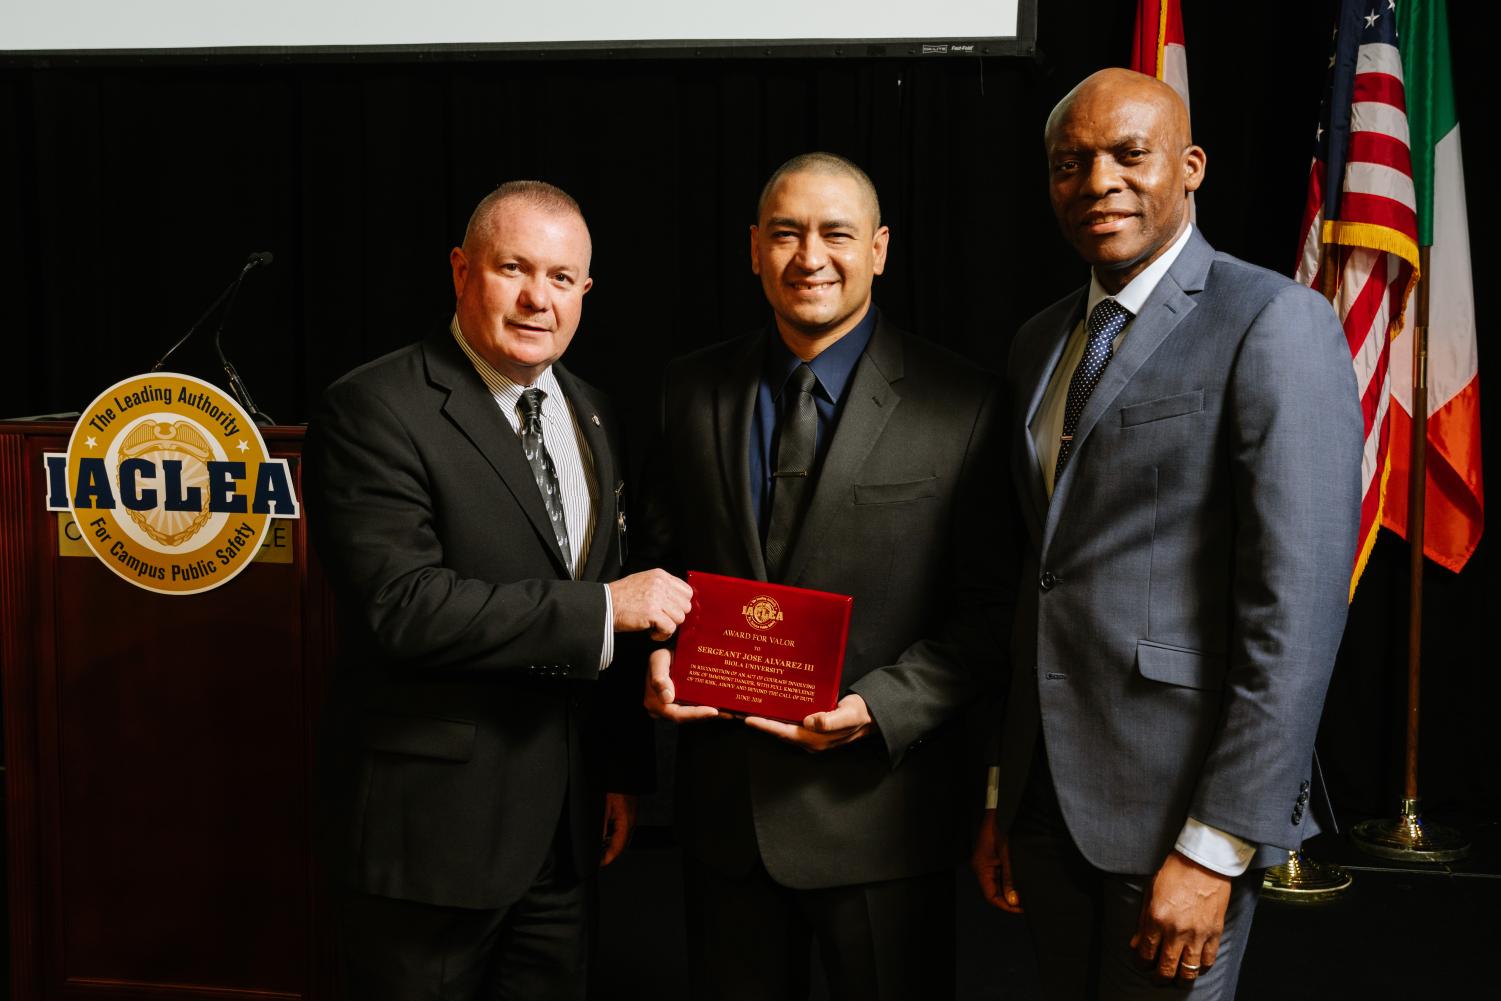 Sgt. Alvarez receiving his award alongside Chief John Ojeisekhoba